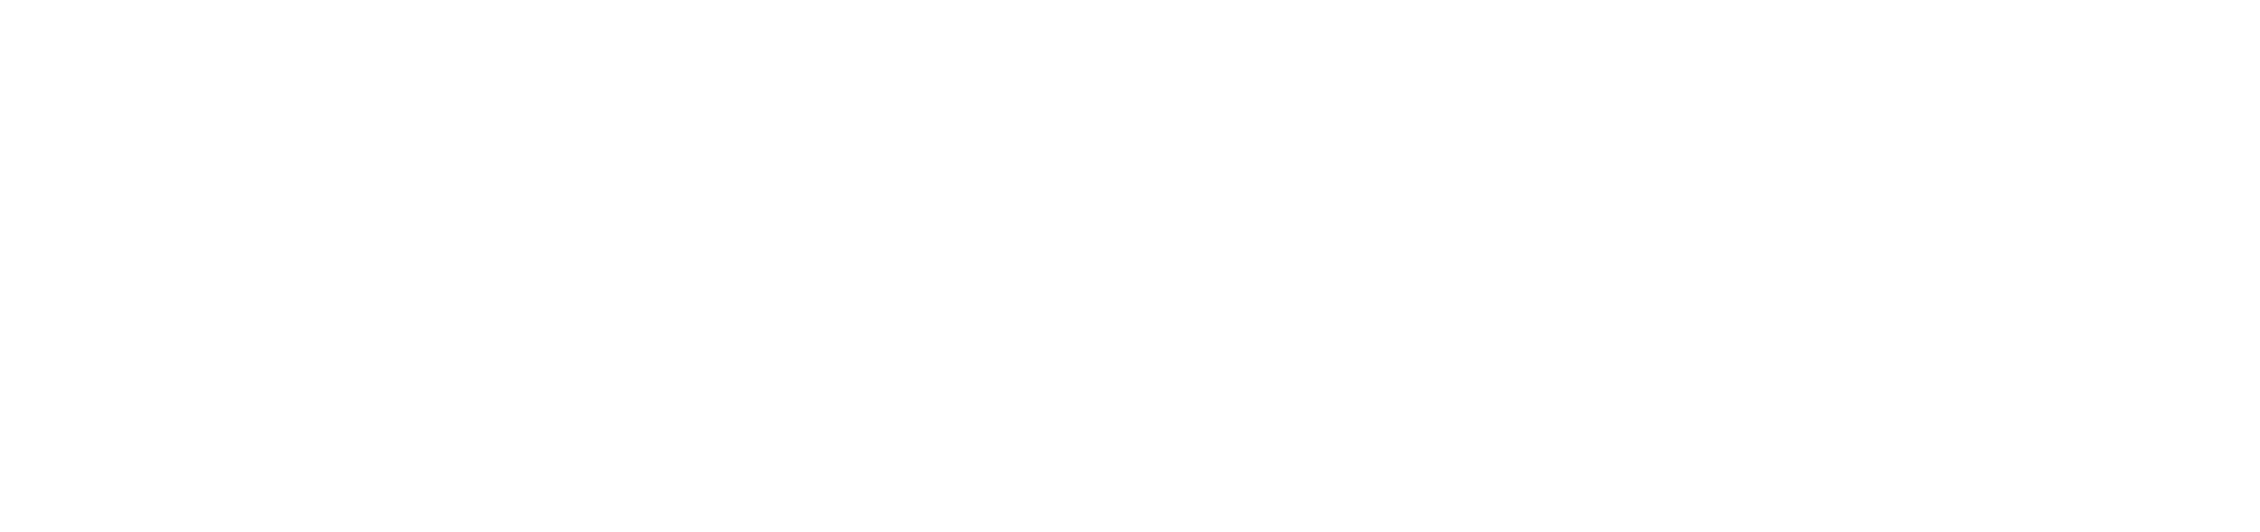 NOVUS #1 Plastic Clean and Shine, 8 oz – RustyDesign